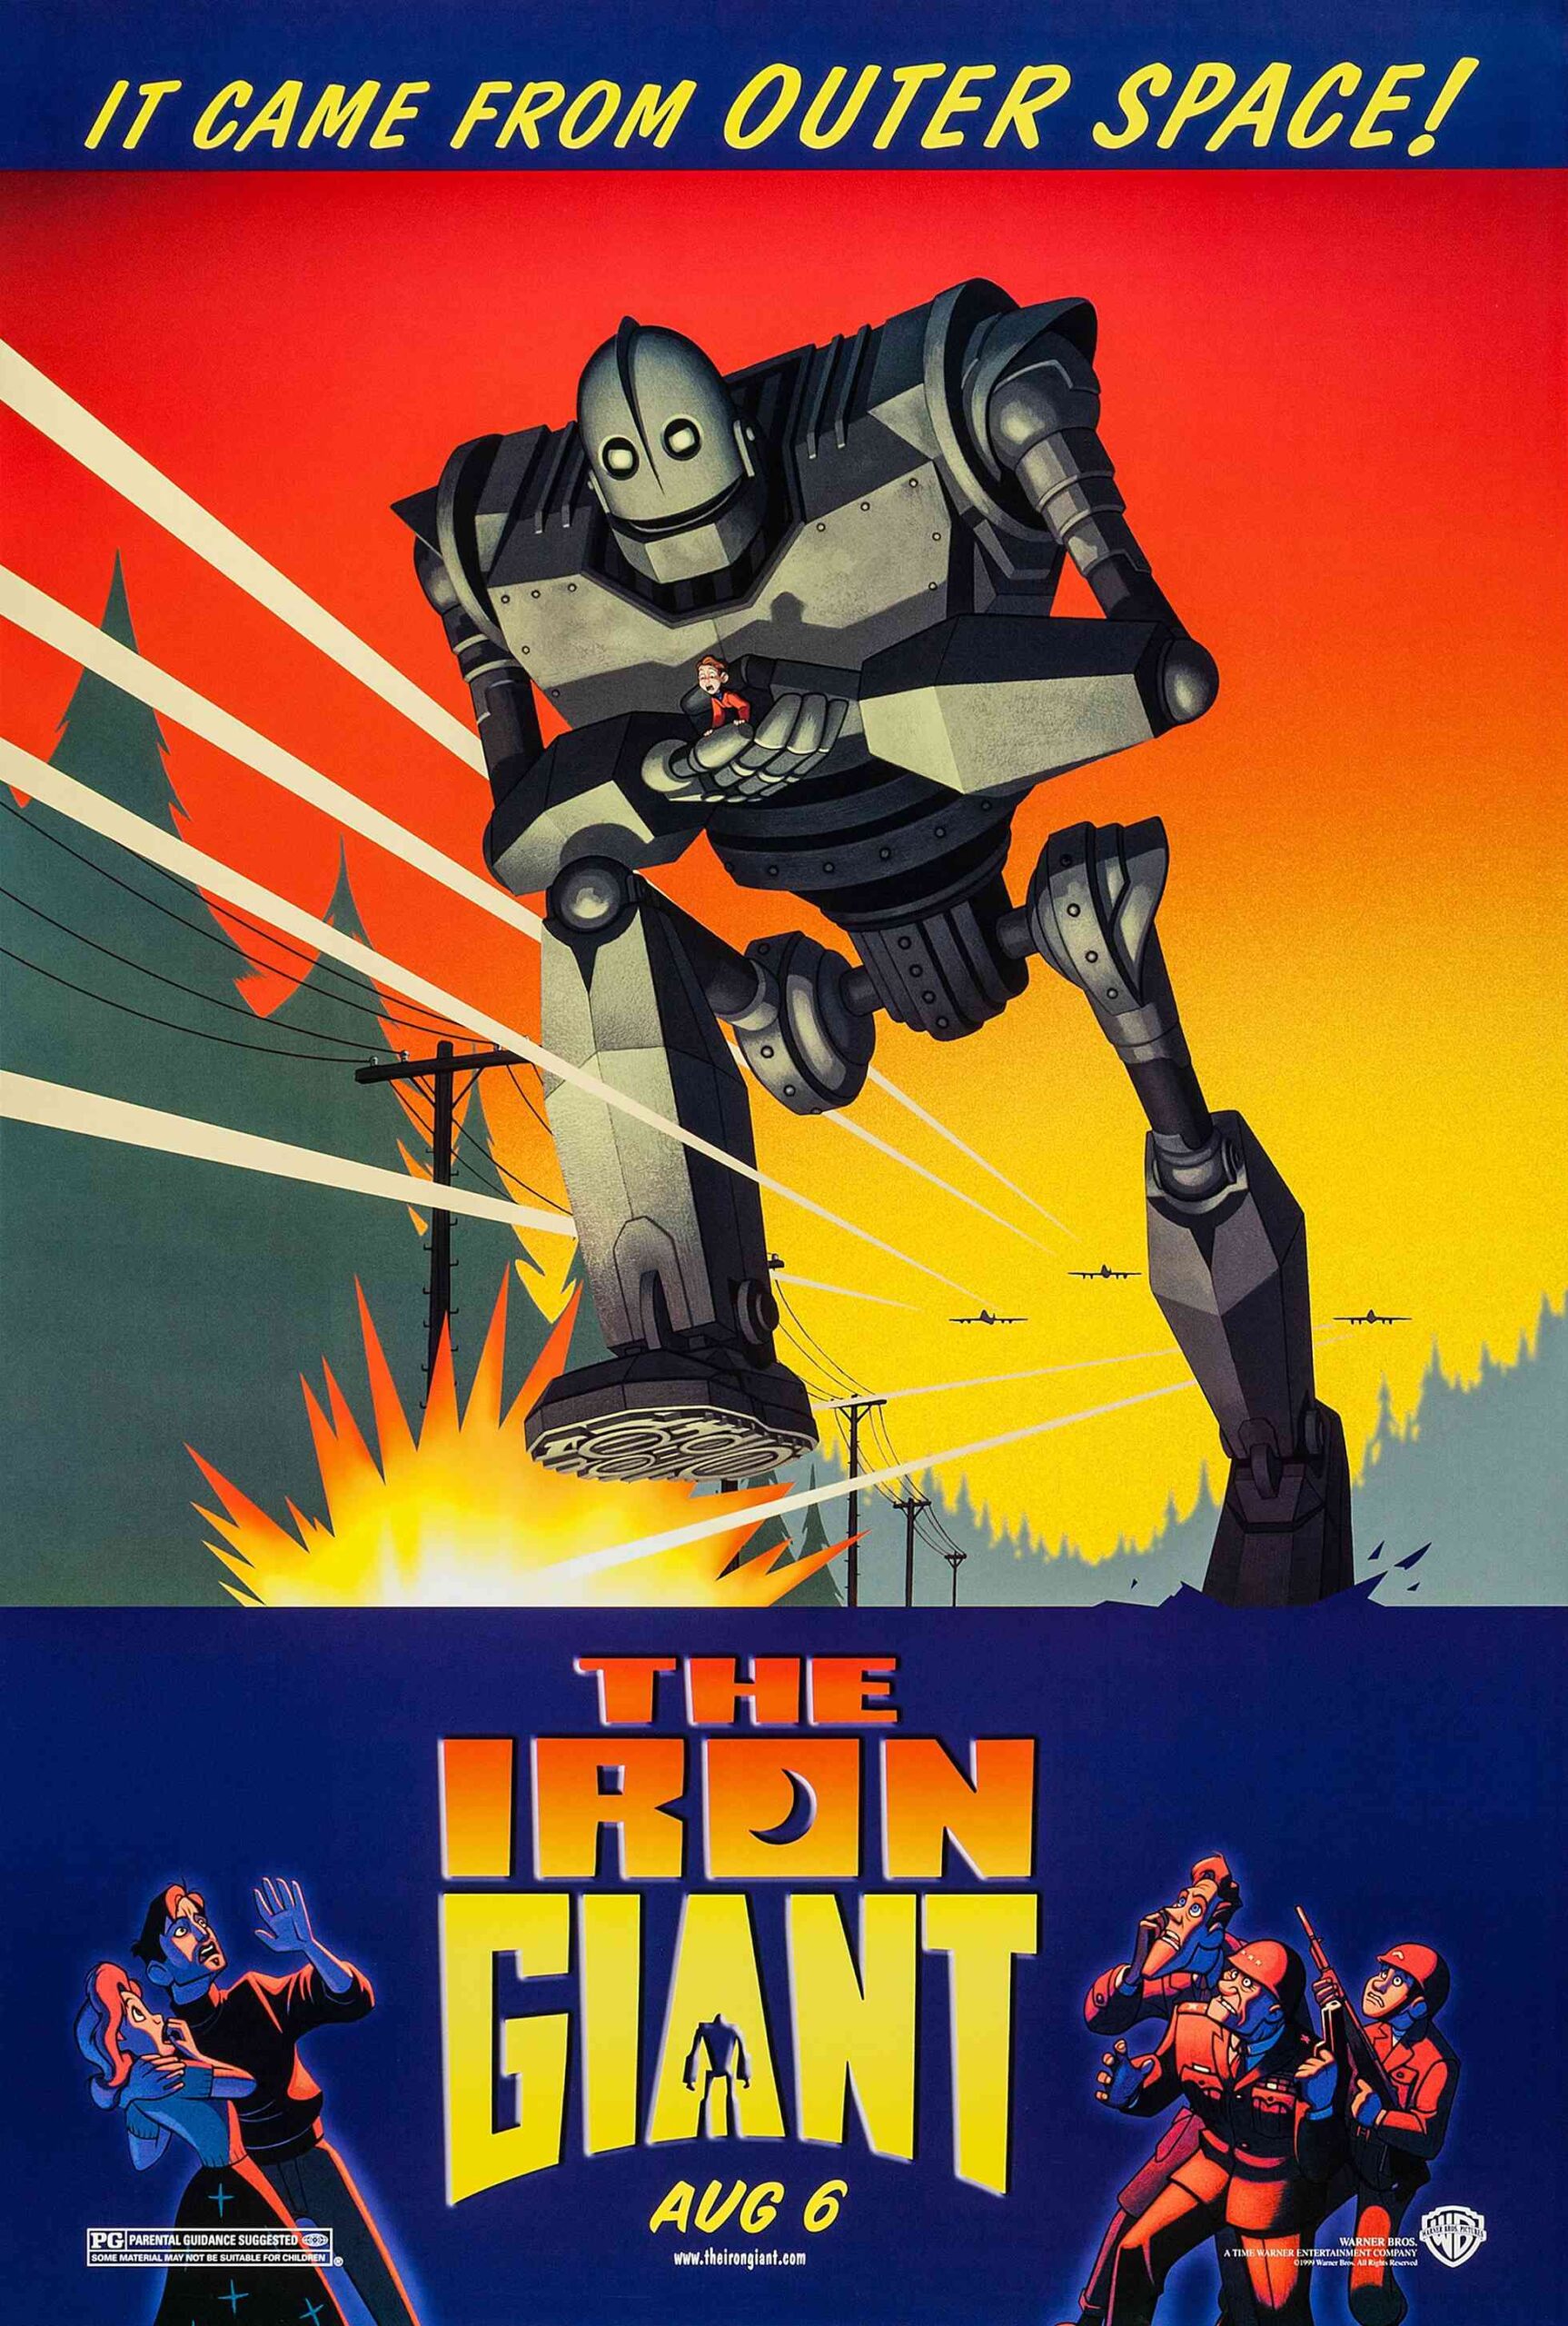 FULL MOVIE: The Iron Giant (1999)